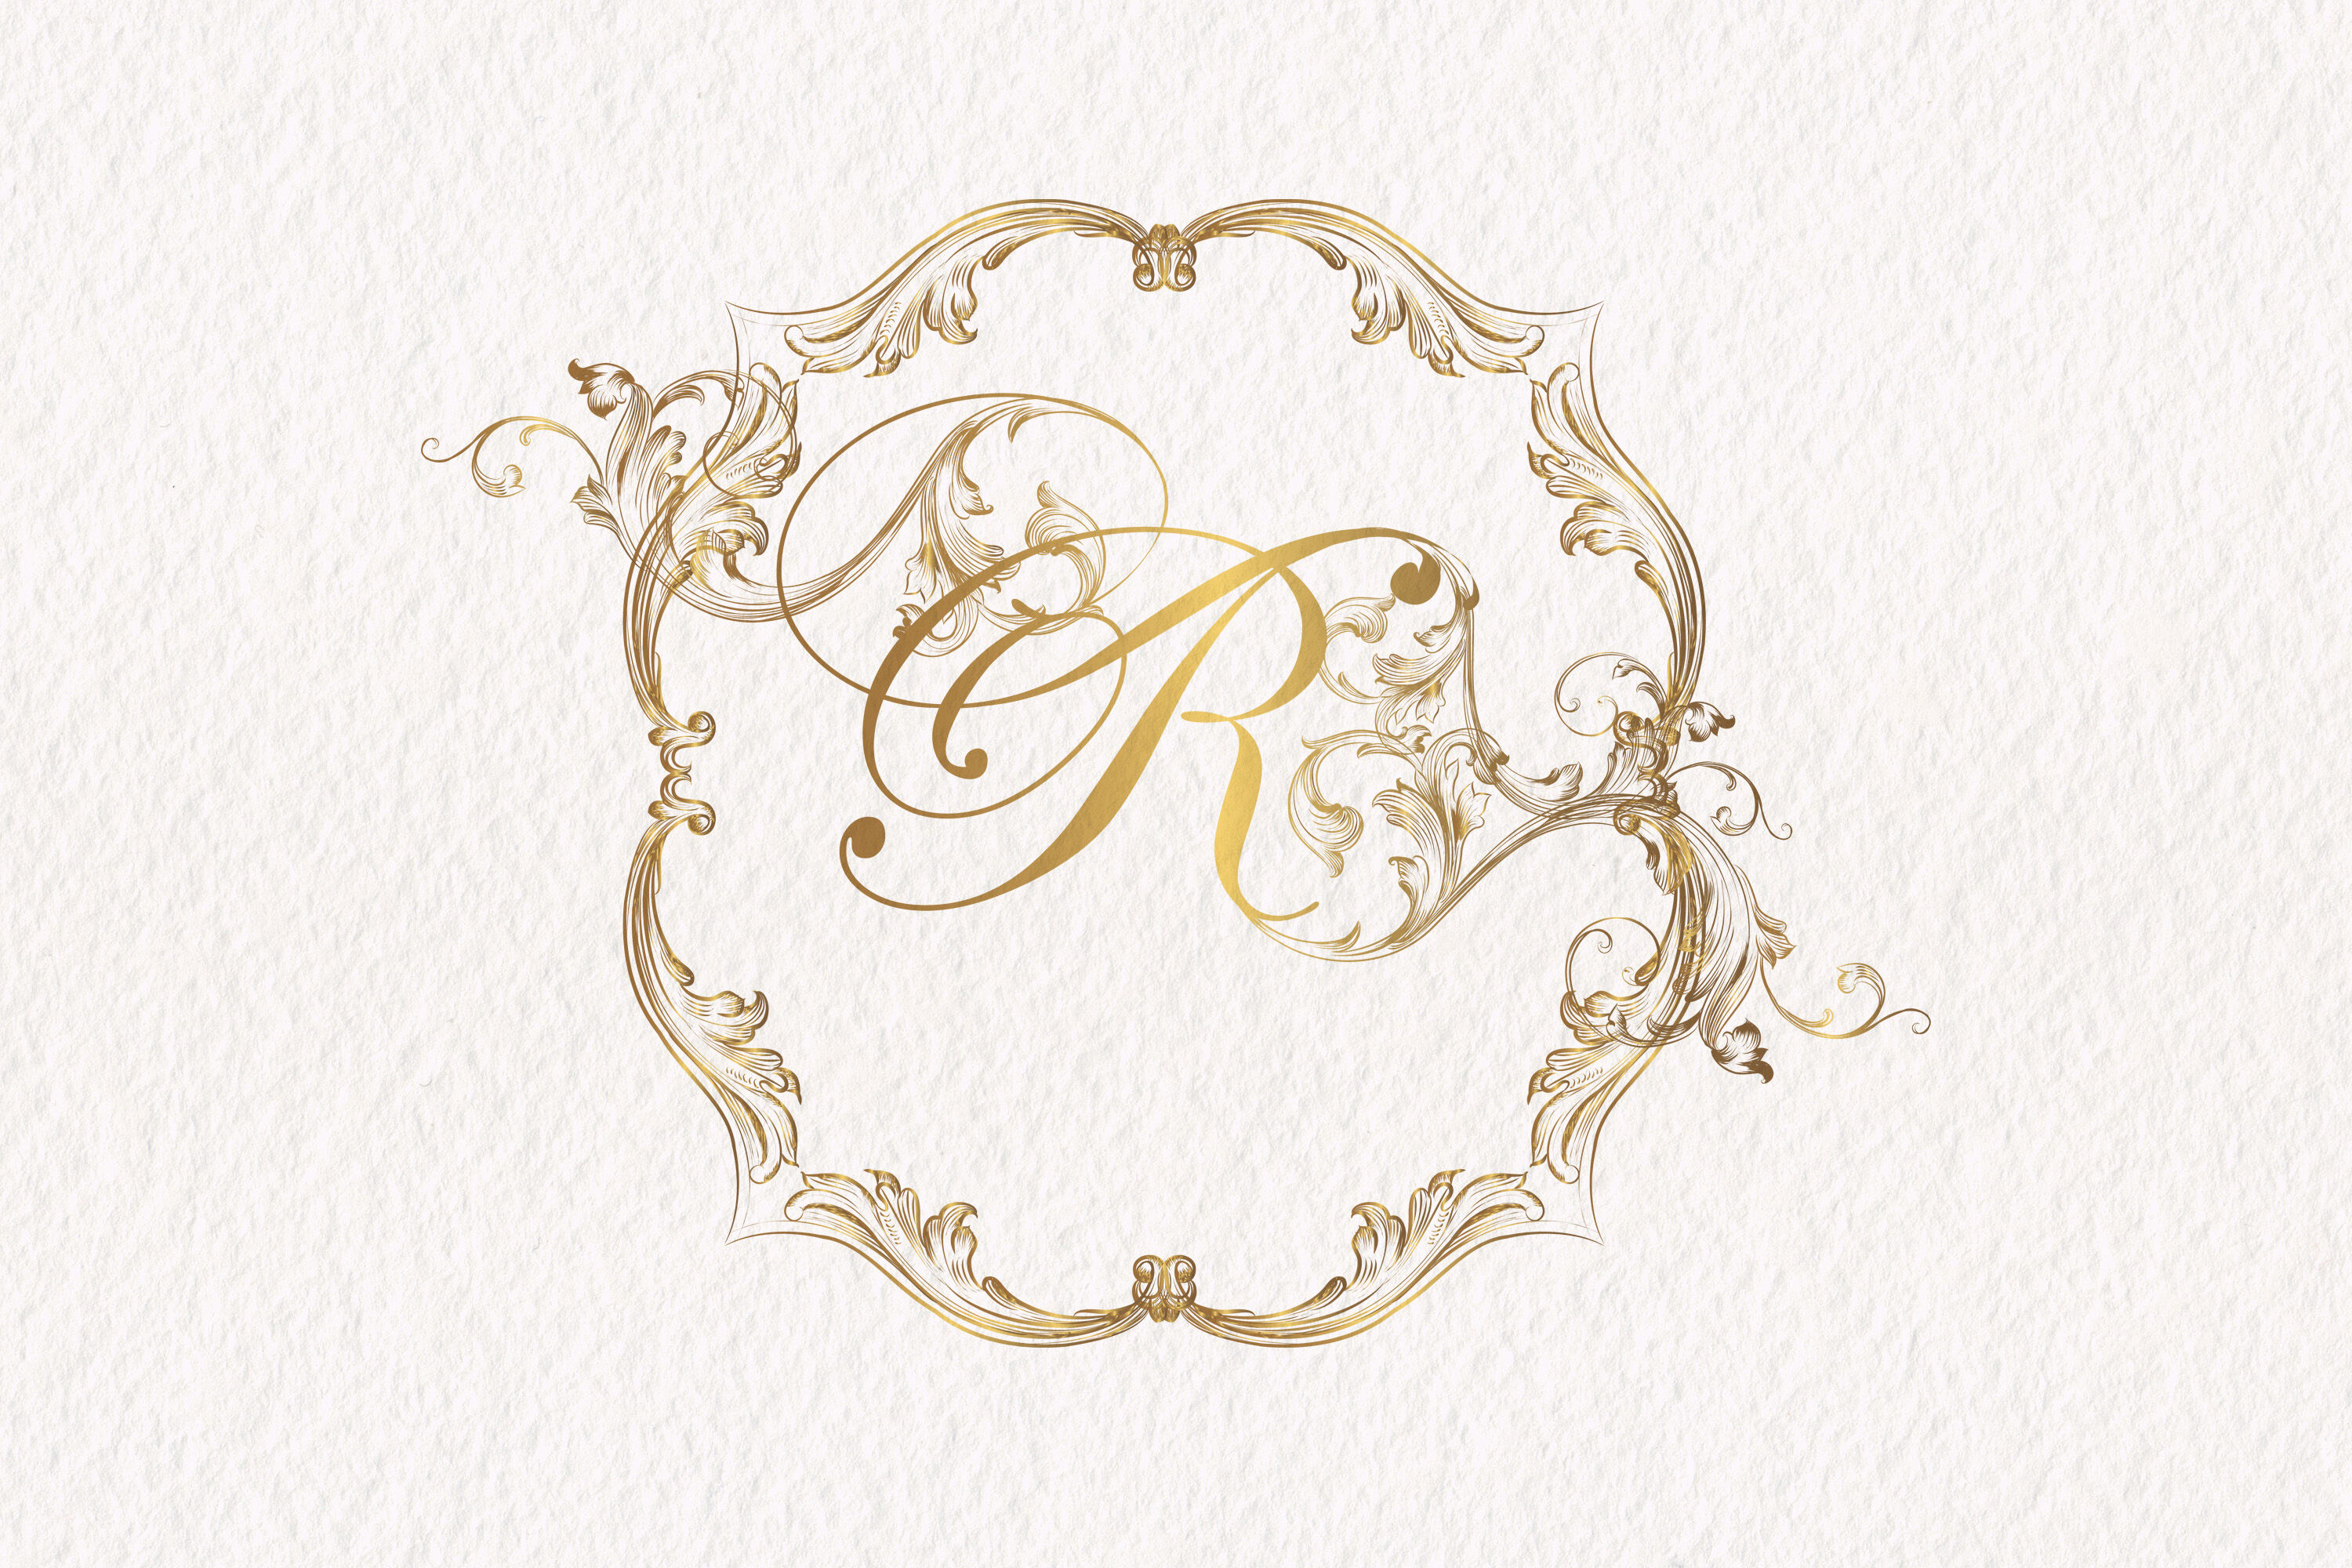 Premium Vector  Wedding monogram logo collection